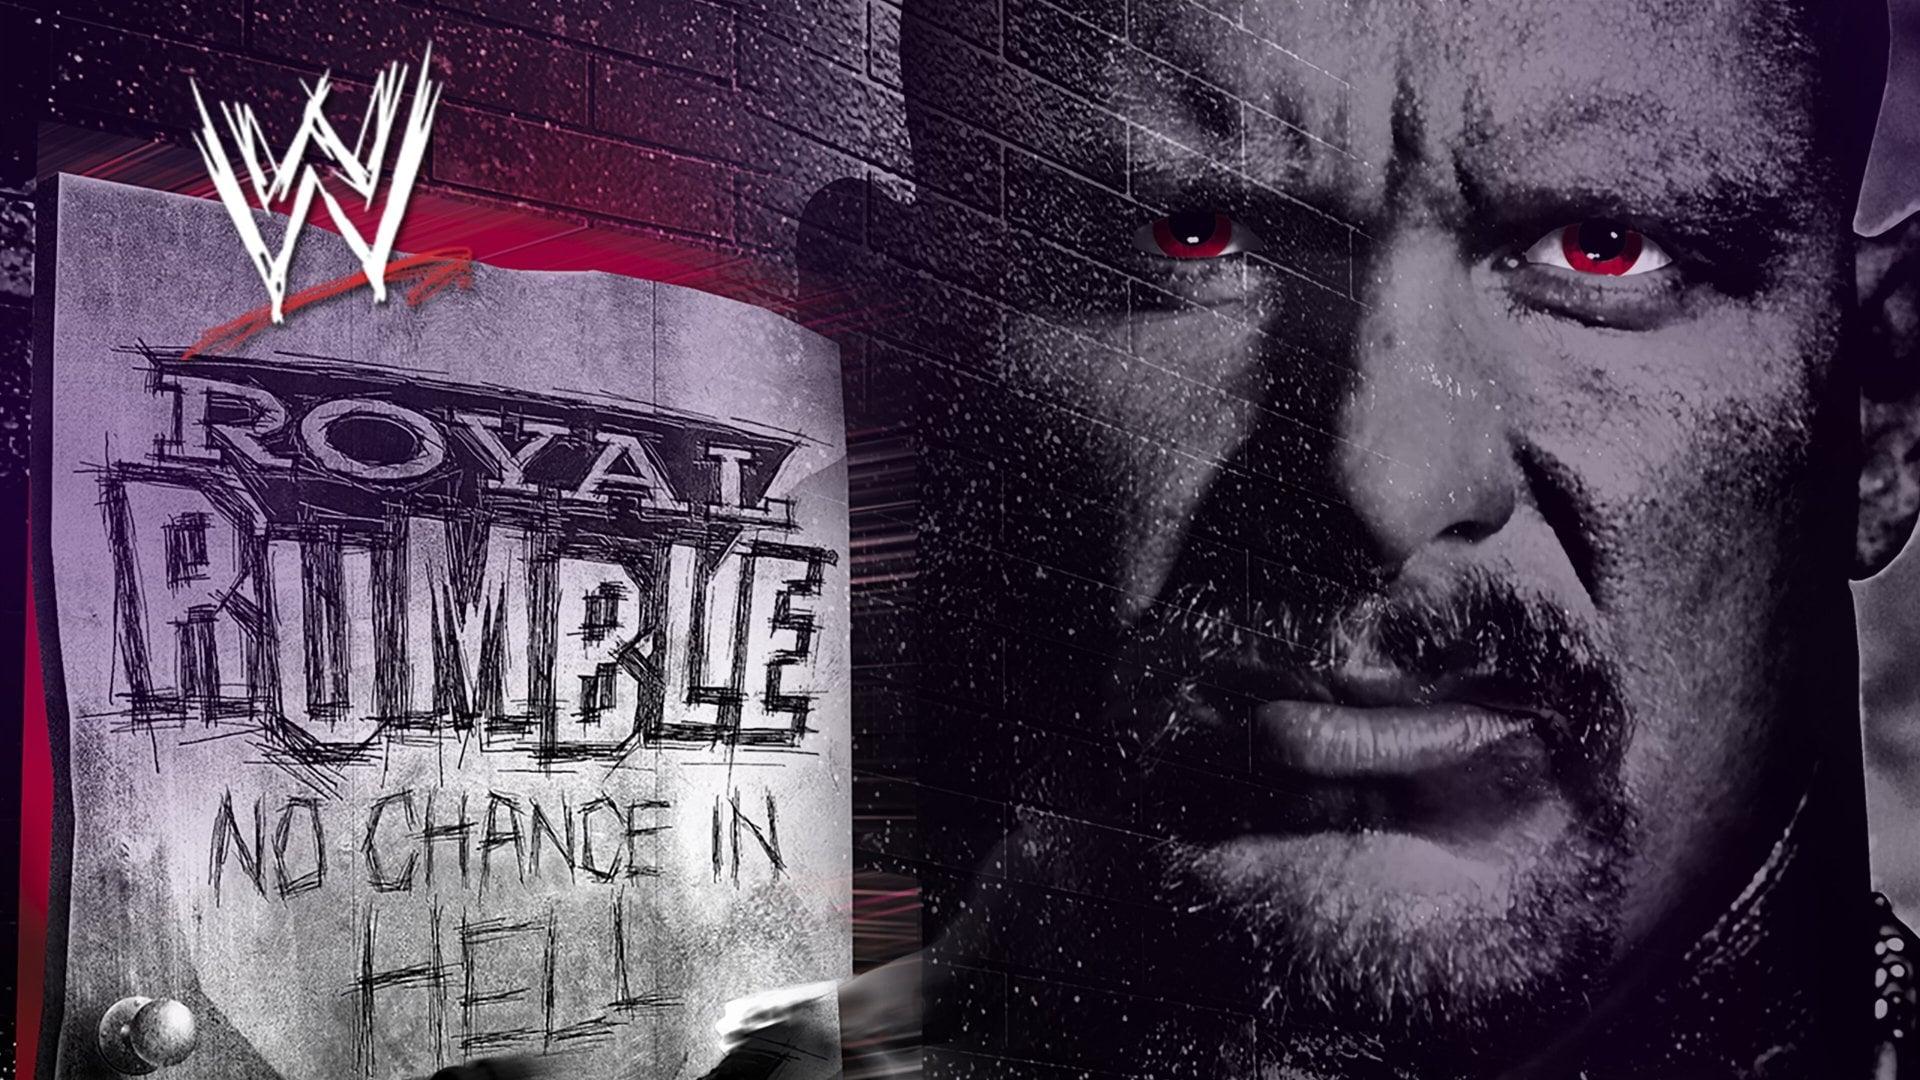 WWE Royal Rumble 1999 backdrop